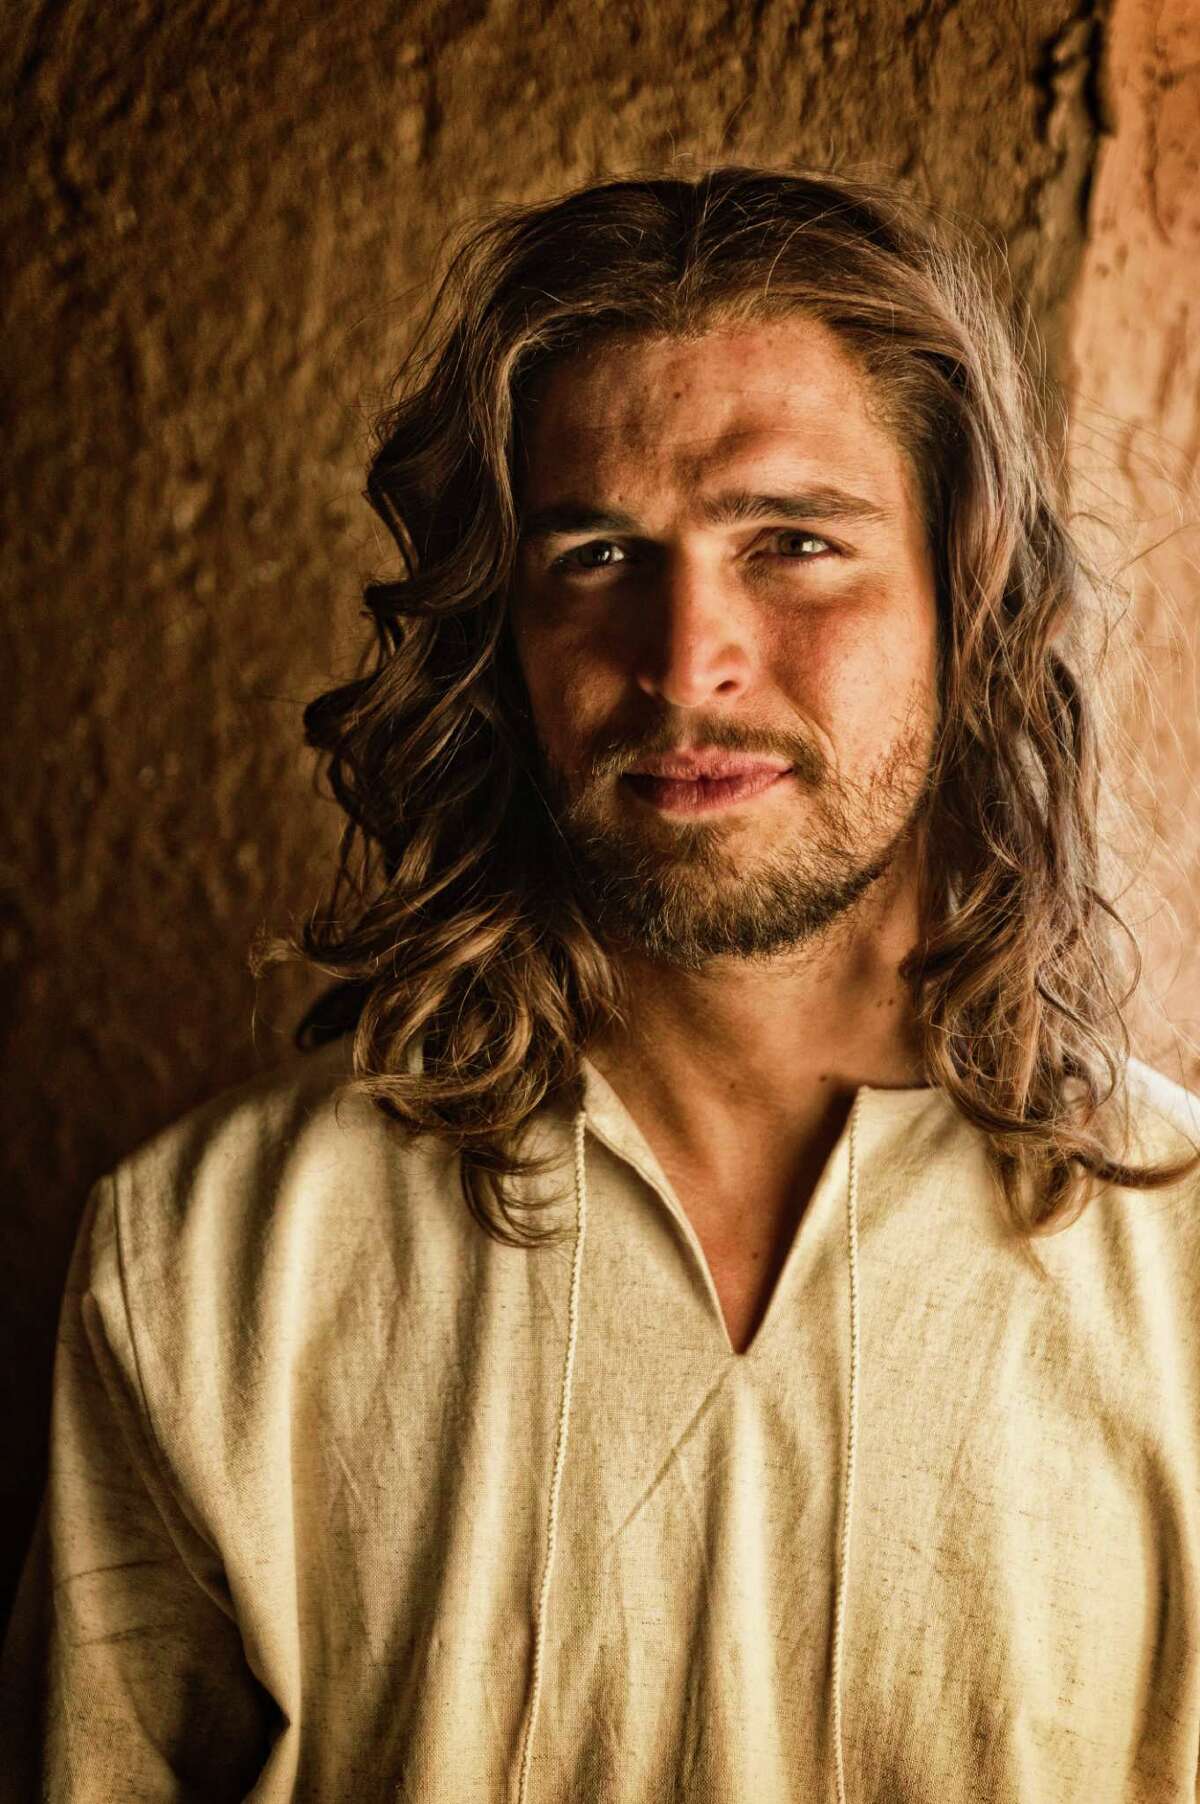 The 2013 miniseries "The Bible" starred Diogo Morgado as Jesus.